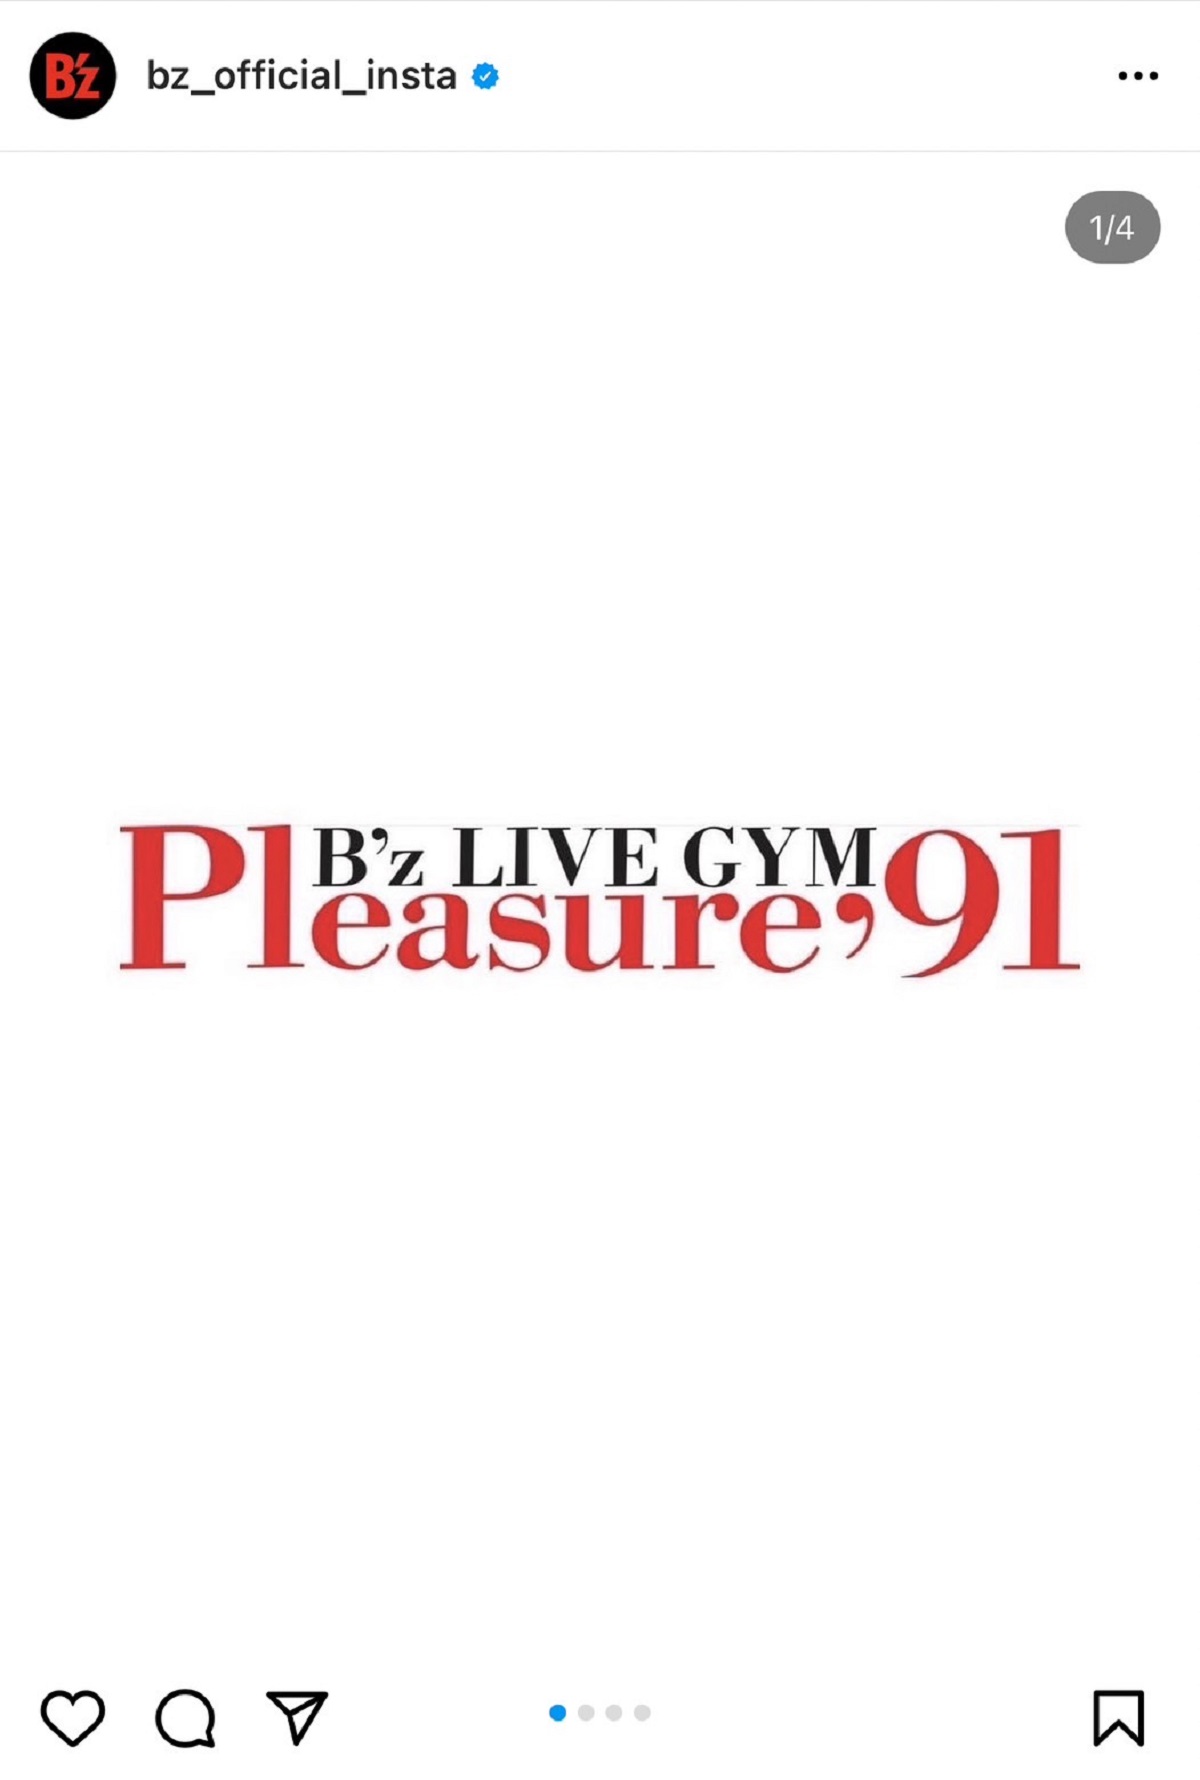 『B'z LIVE-GYM Pleasure '91』を振り返る投稿のキャプチャ画像